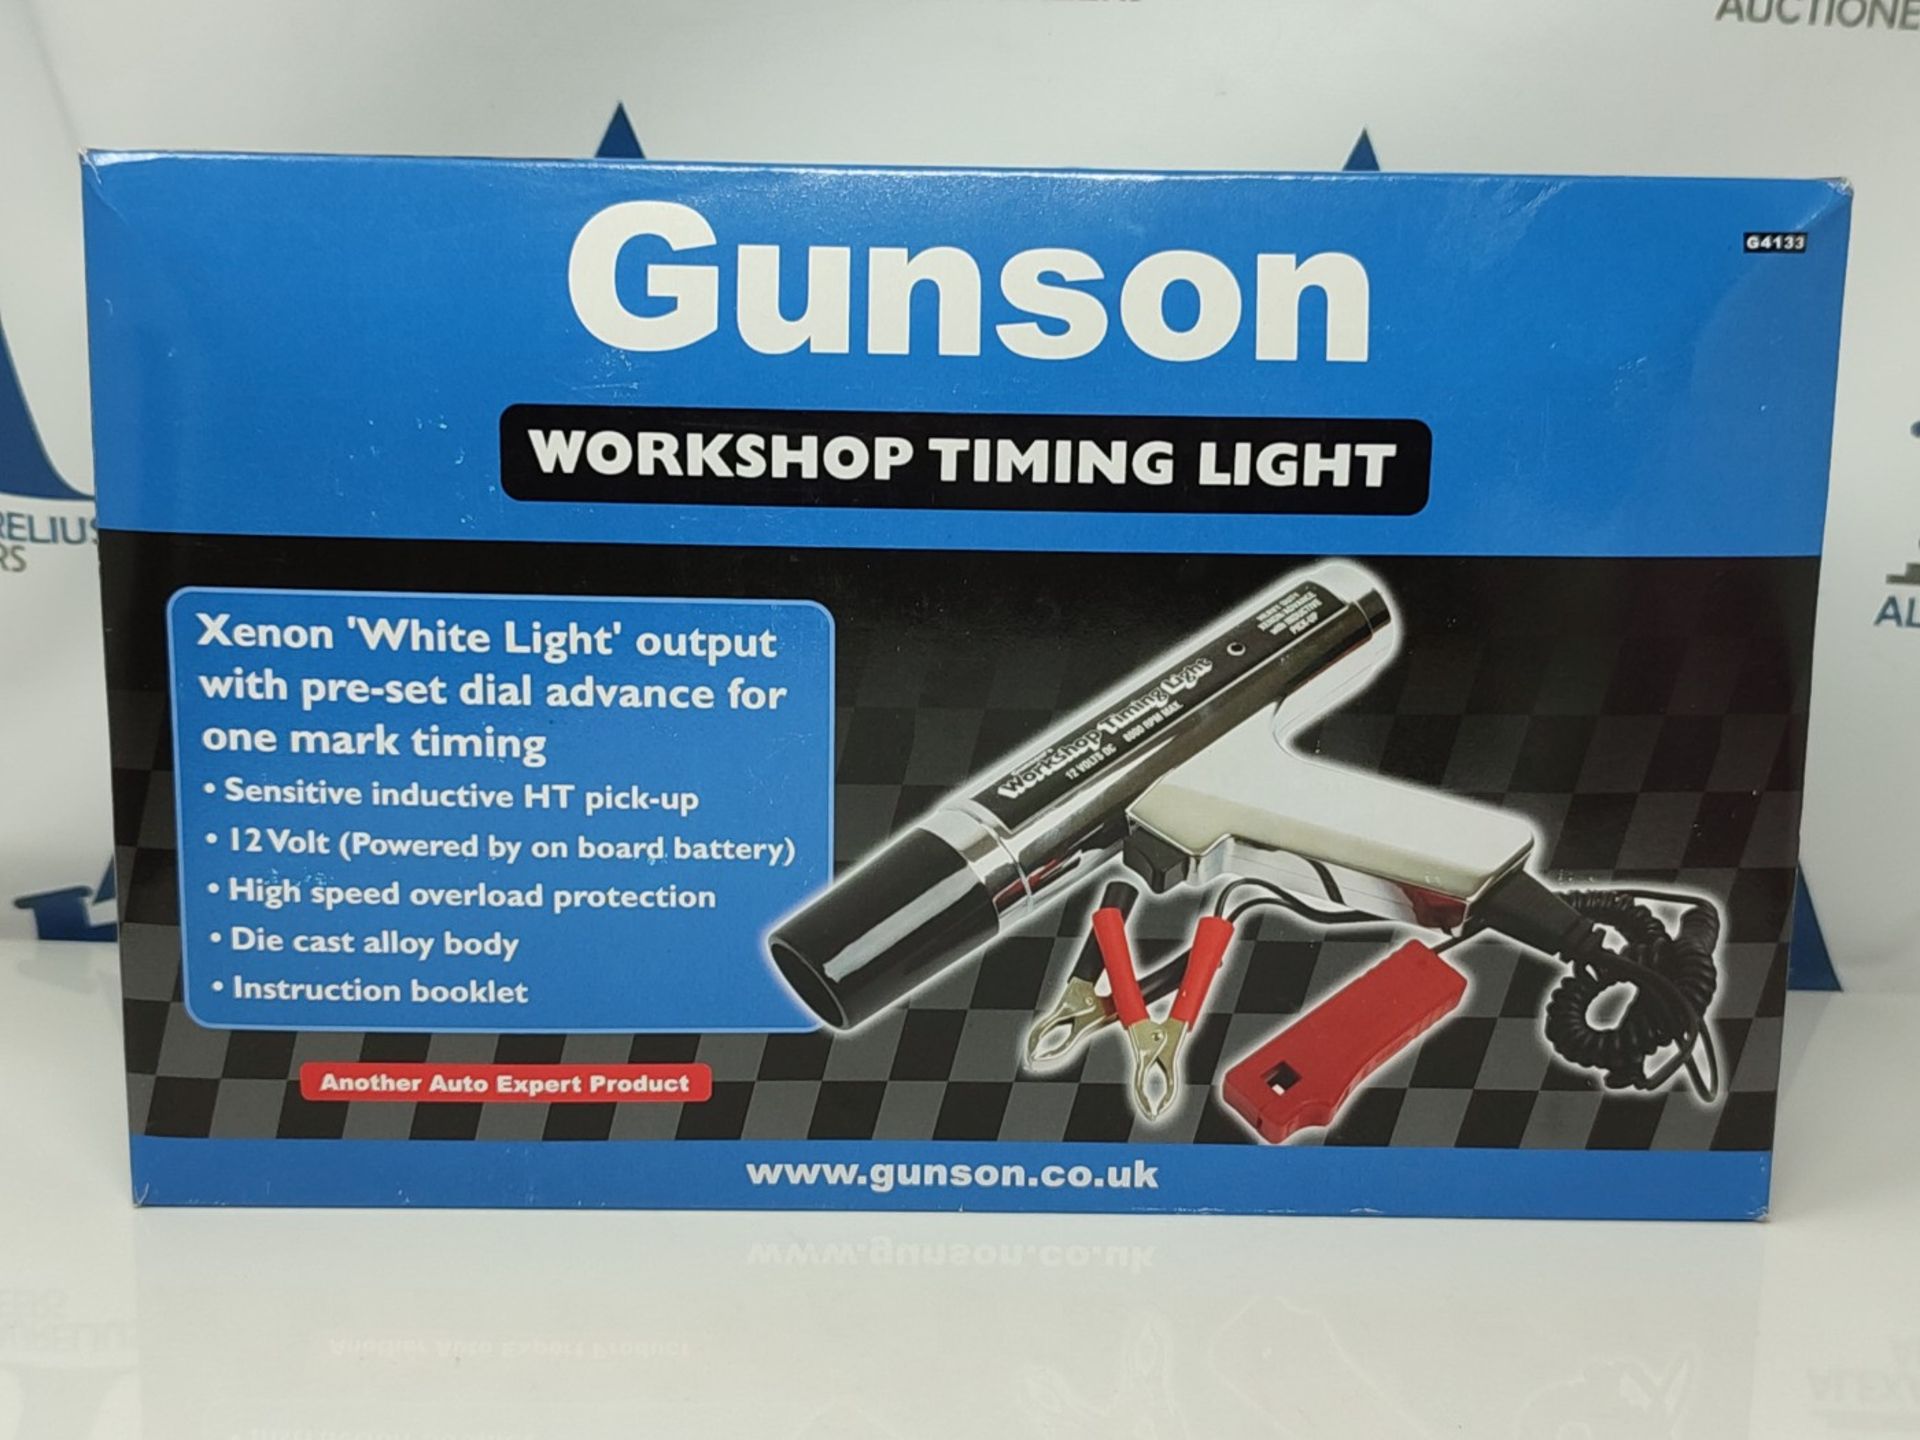 RRP £146.00 Gunson G4133 Timing Light - Workshop - Image 2 of 3